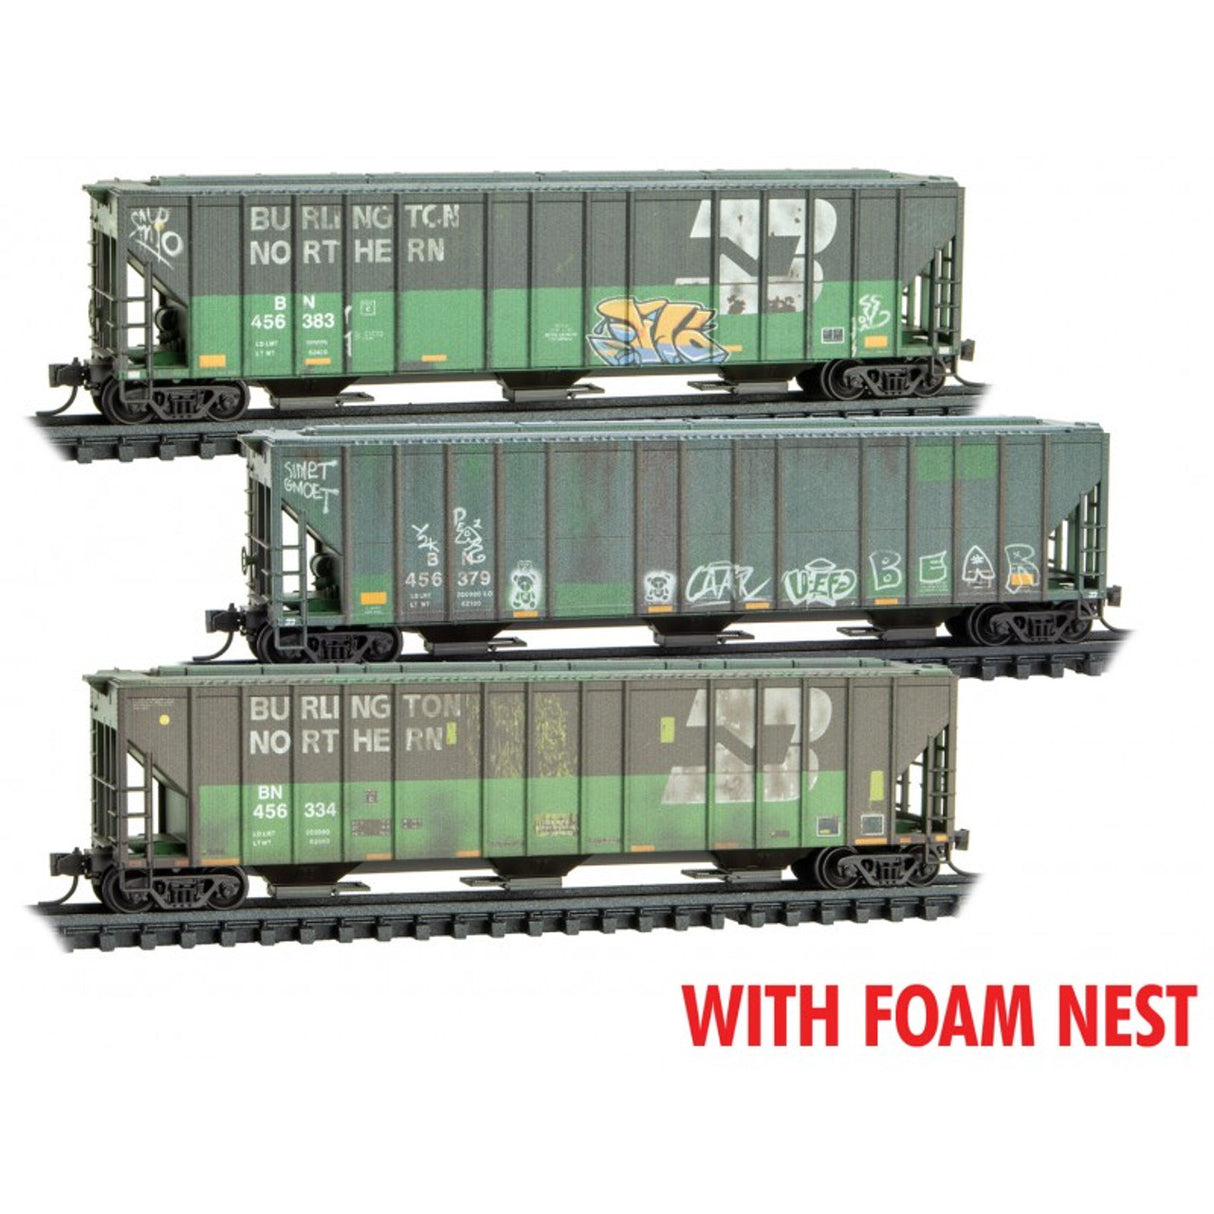 Micro Trains N Scale BNSF/Ex-BN weathered 3 pack (3-bay Hopper) Foam Insert Burlington Northern (BN) 456334, 456379, 456383